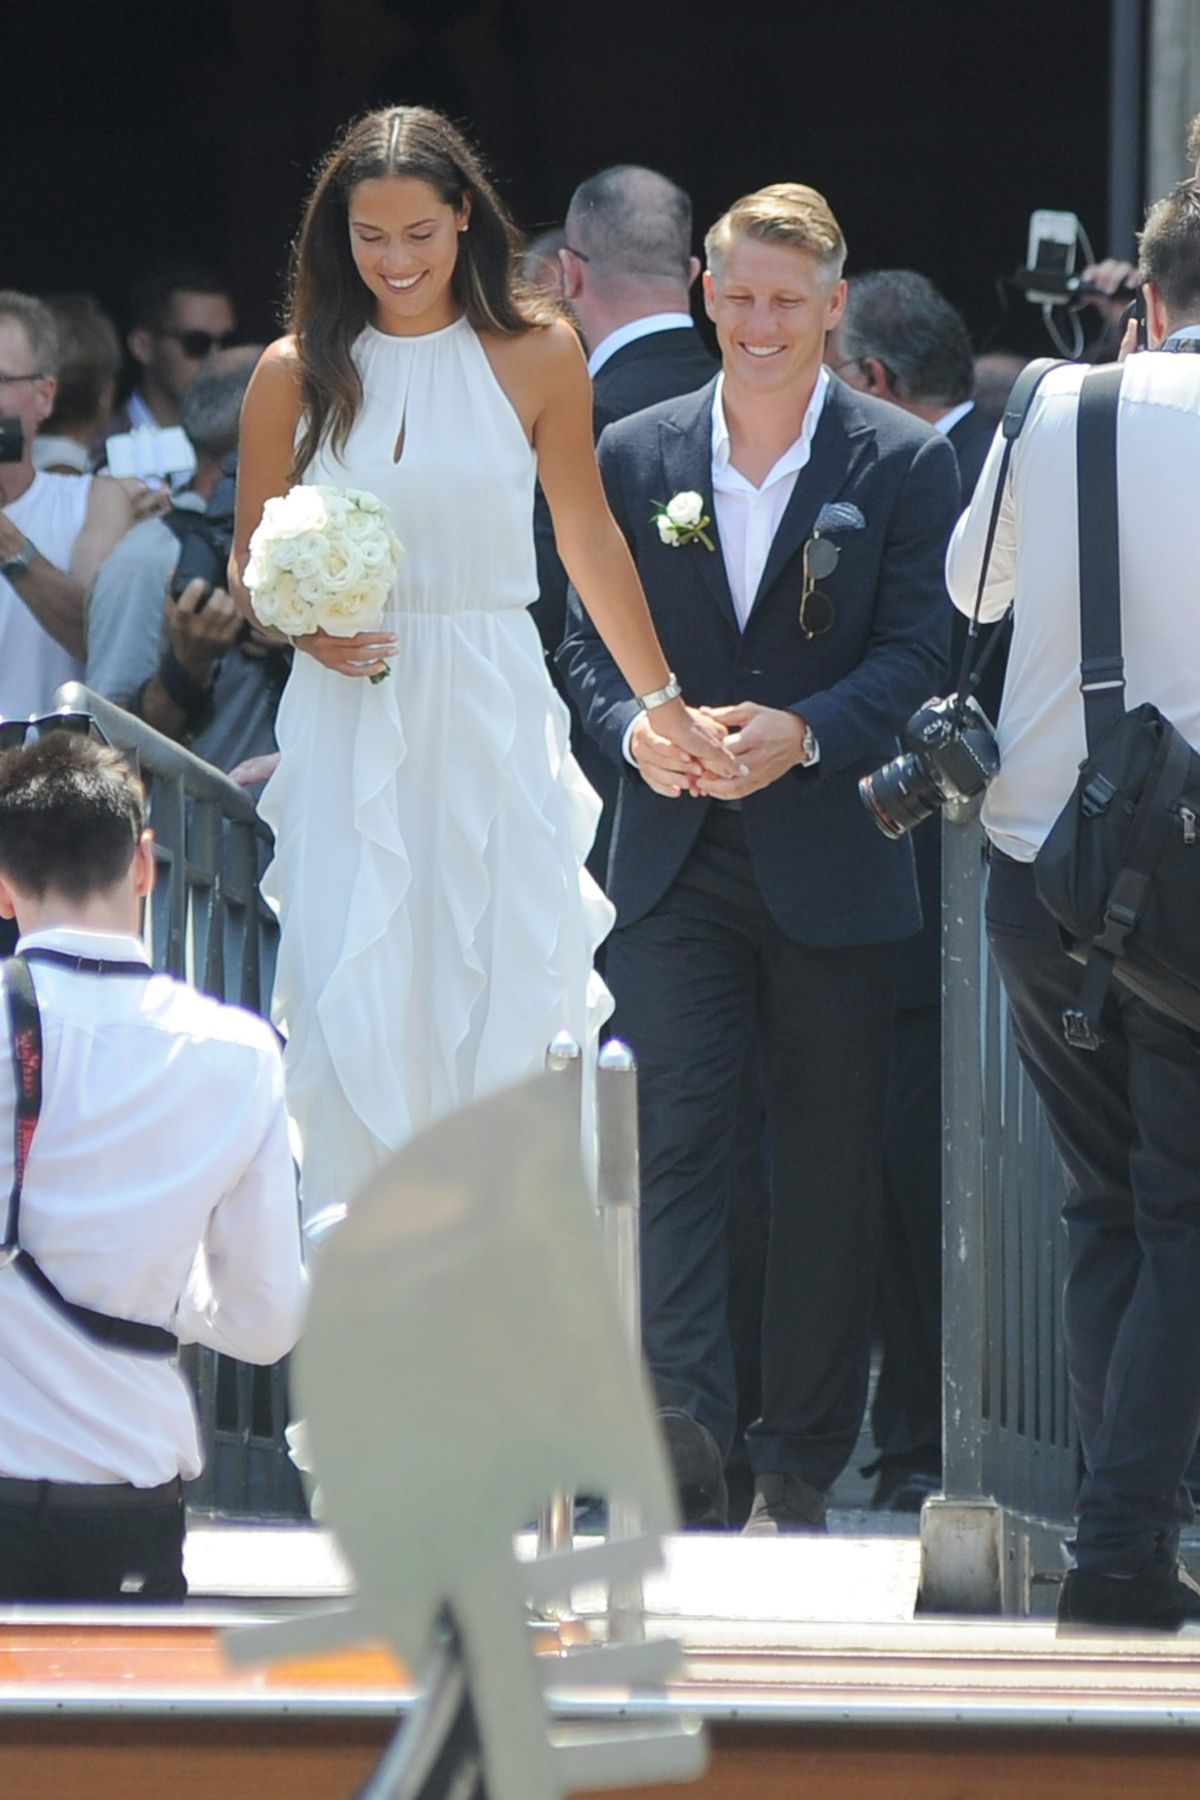 ANA IVANOVIC and Bastian Schweinsteiger at Wedding Ceremony in Venice